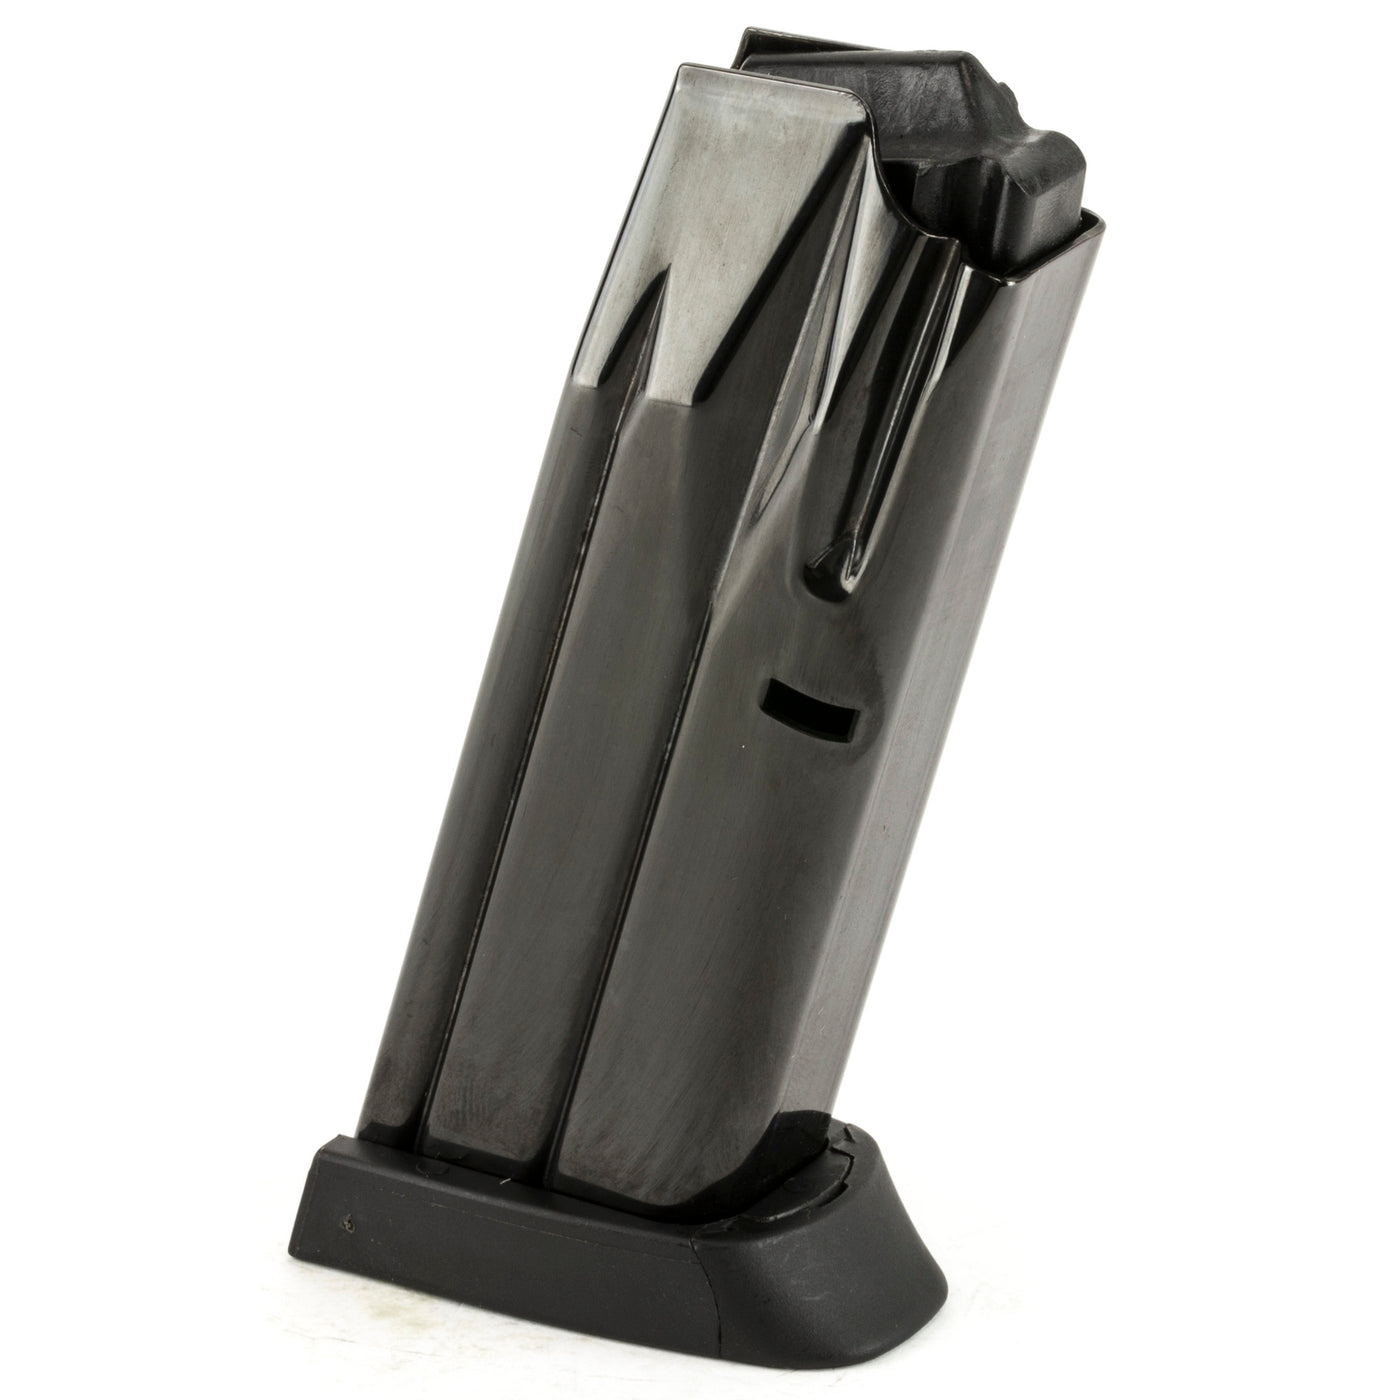 Beretta Magazine Px4 9mm Sub- - Compact Snap Grip 13rd Blued